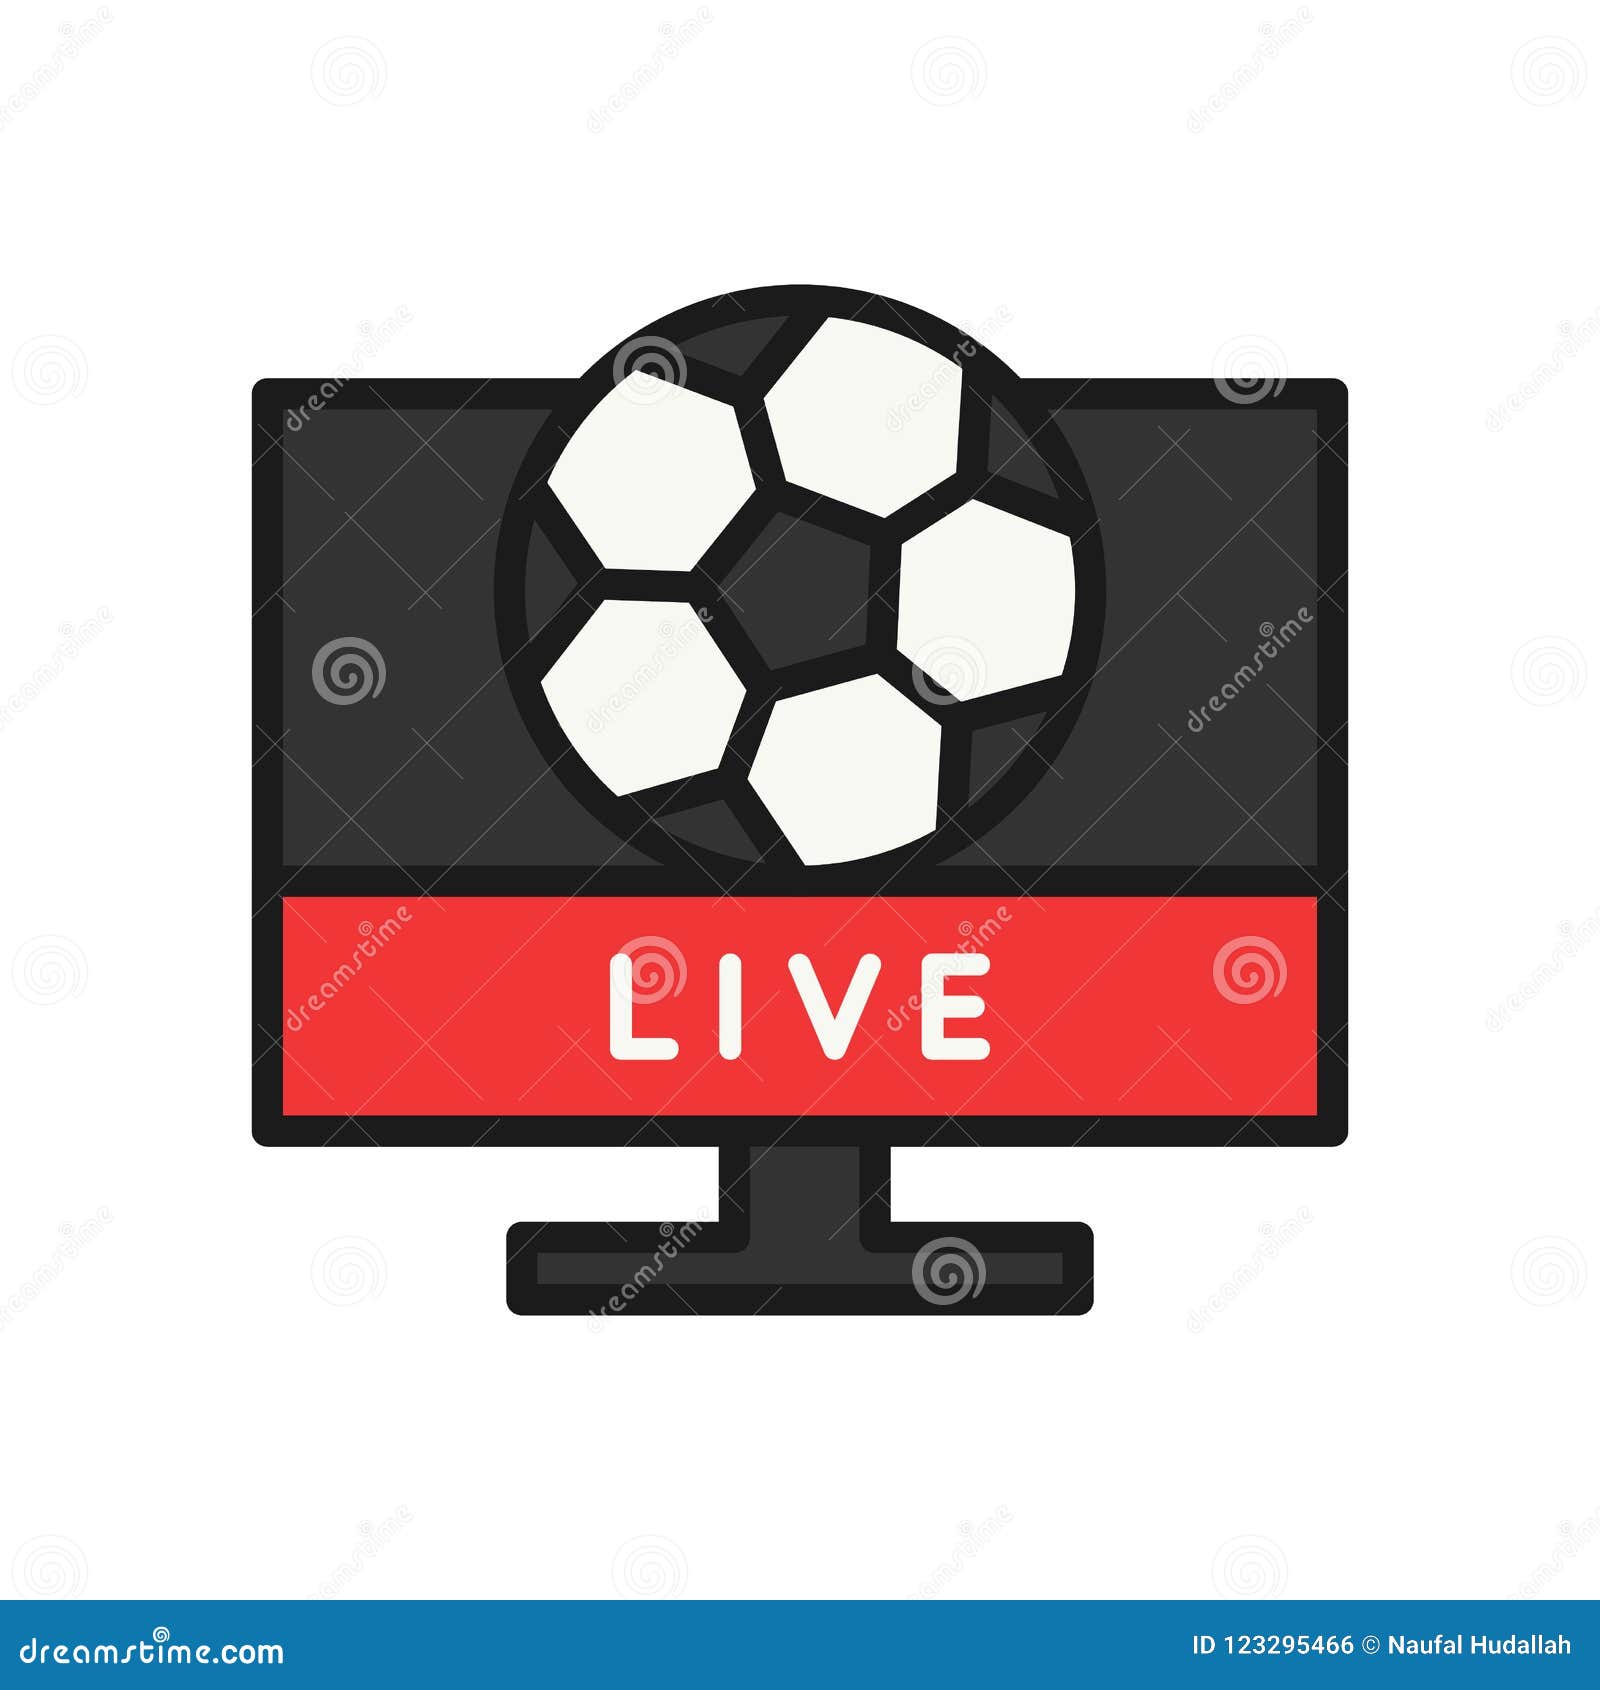 today ipl match 2022 live